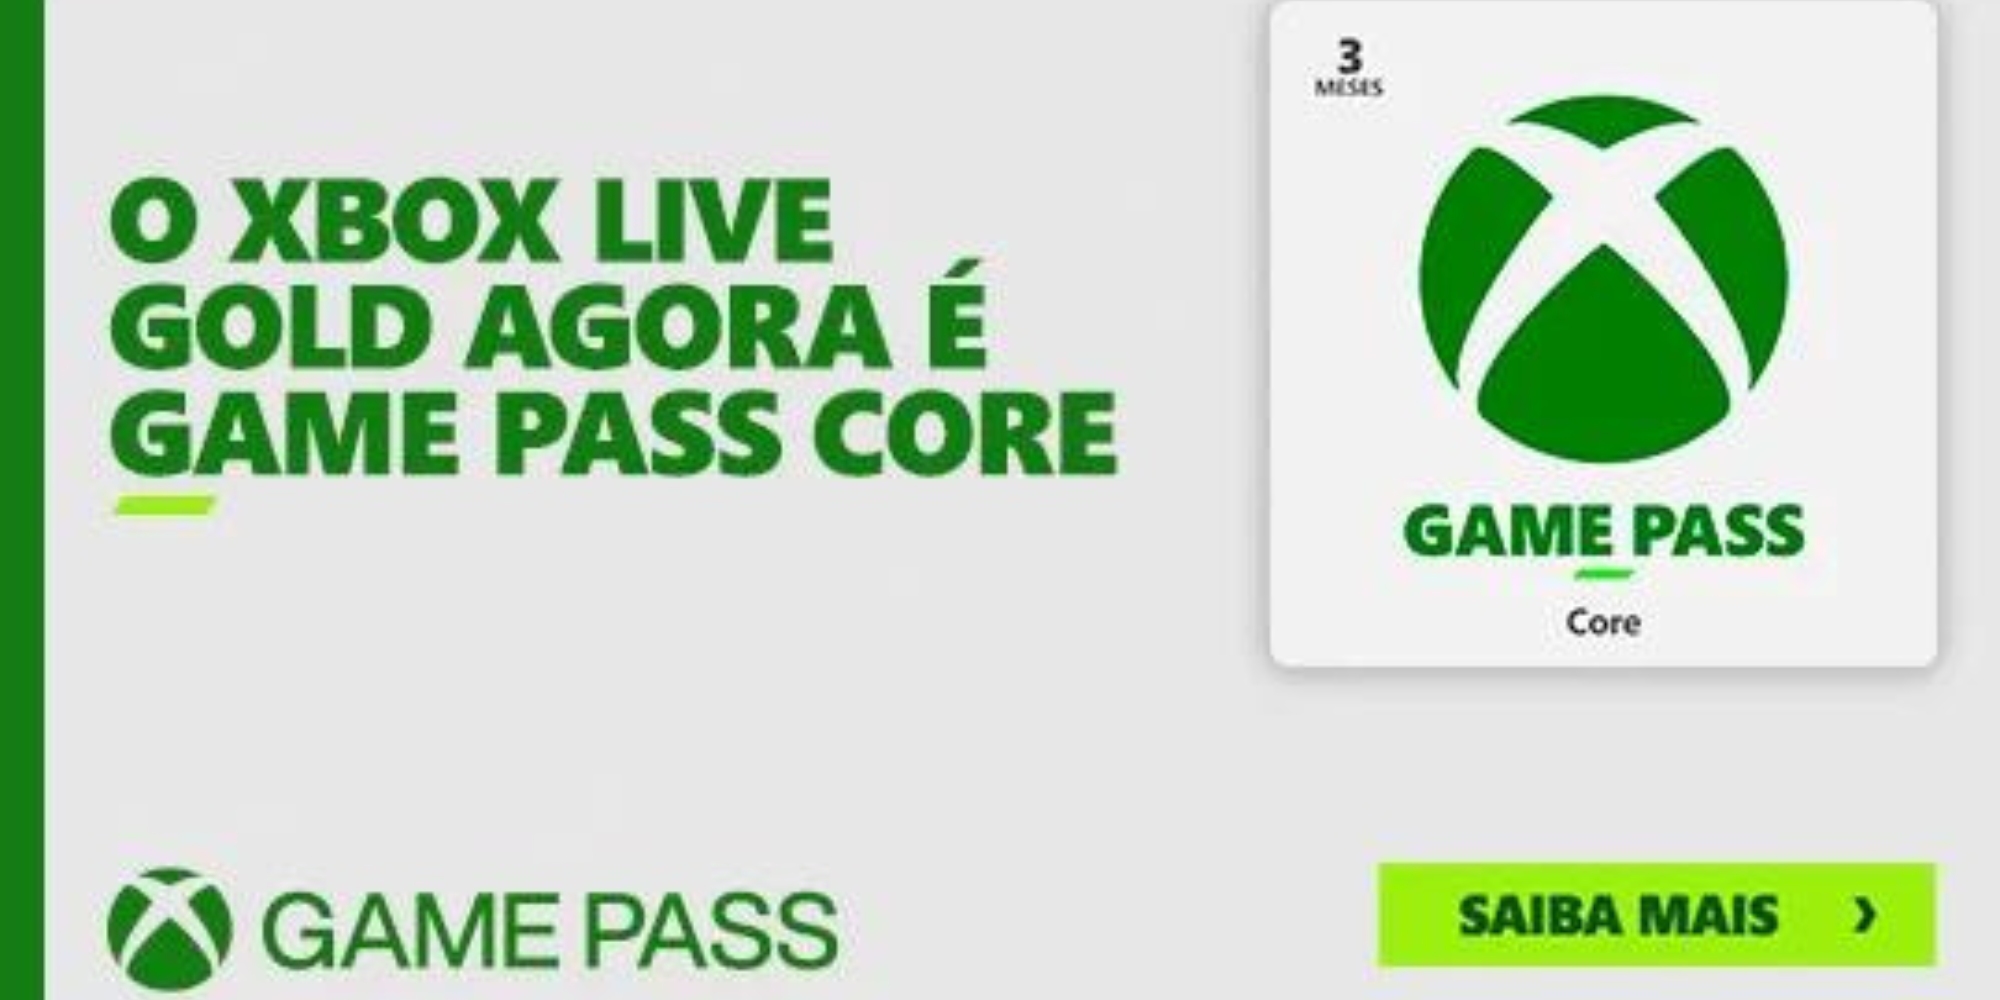 Game Pass Core: substituto do Xbox Live Gold anuncia lista